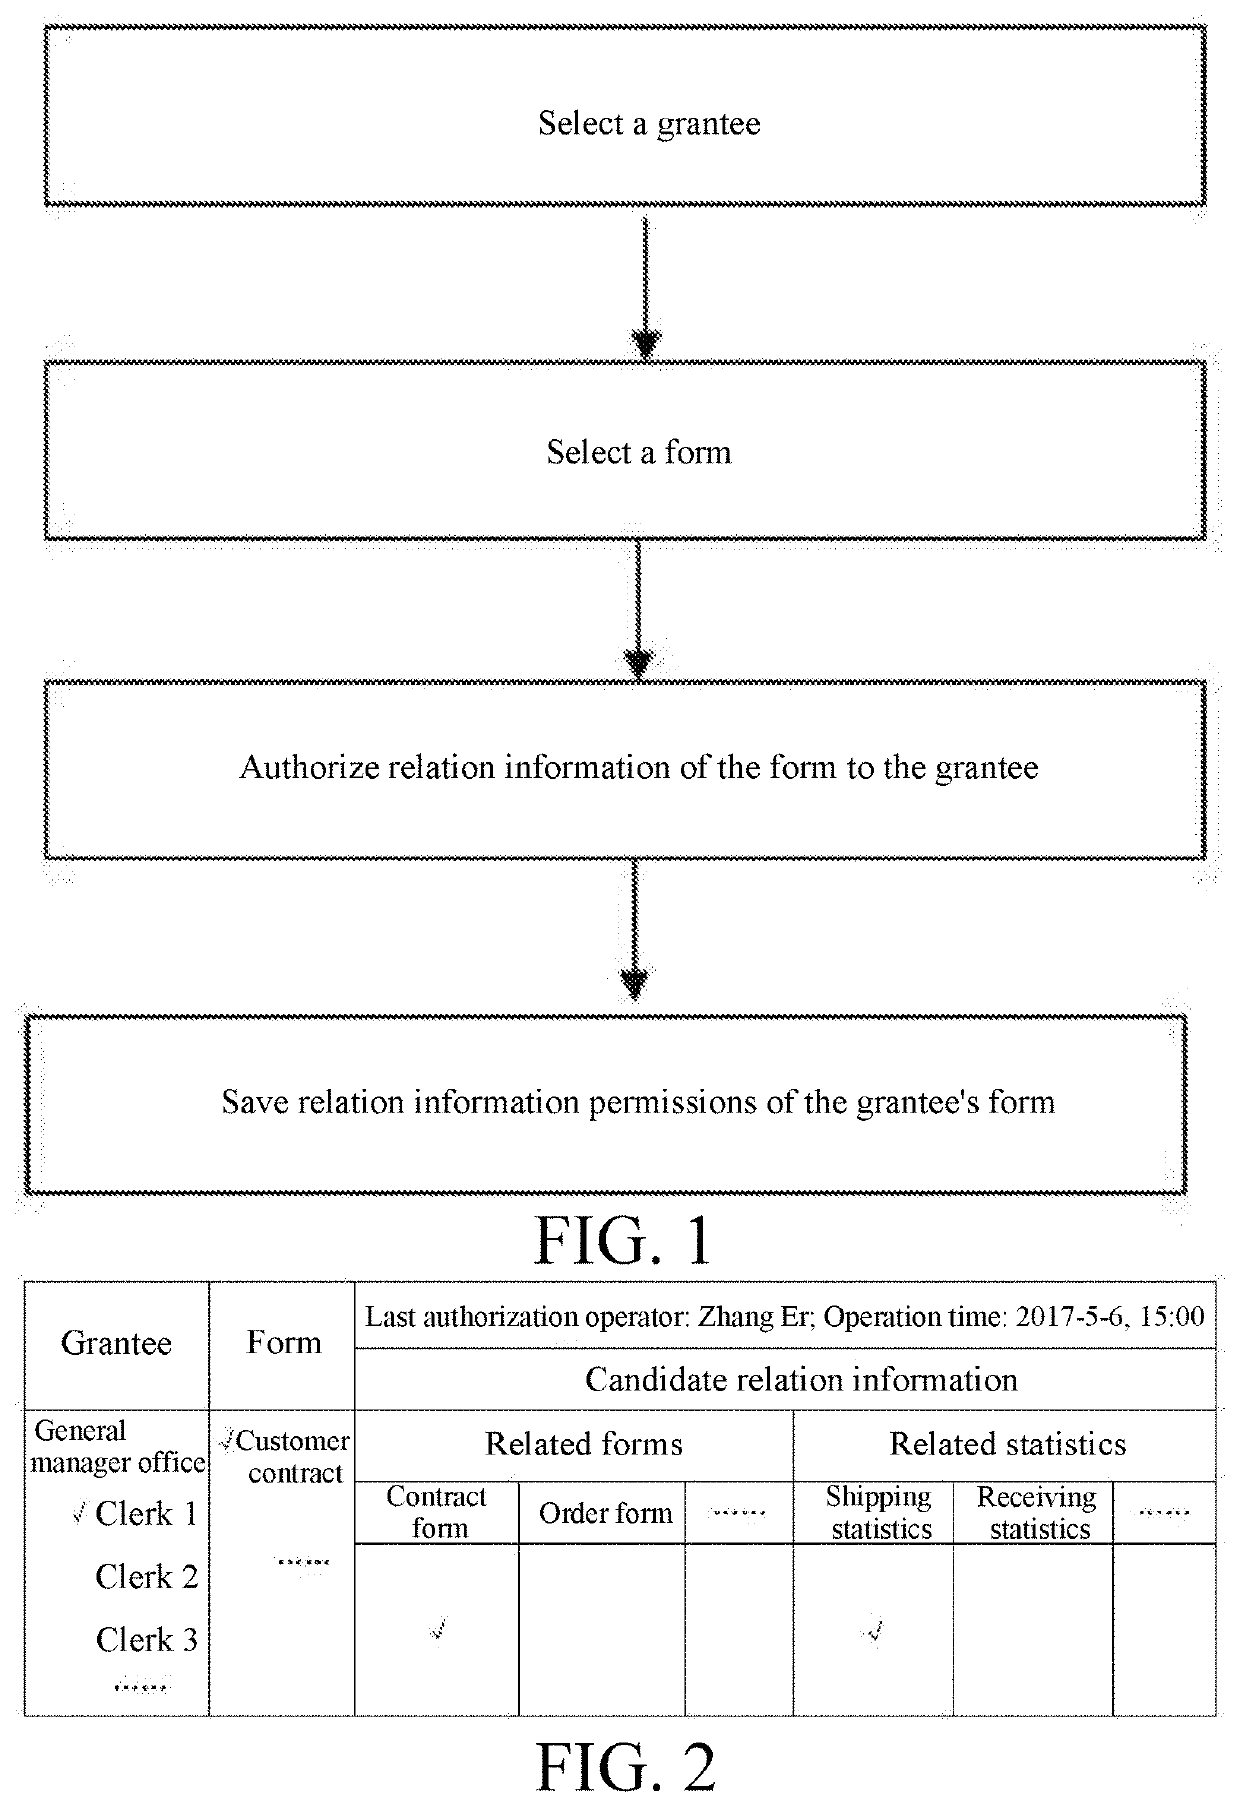 Association information authorization method for form